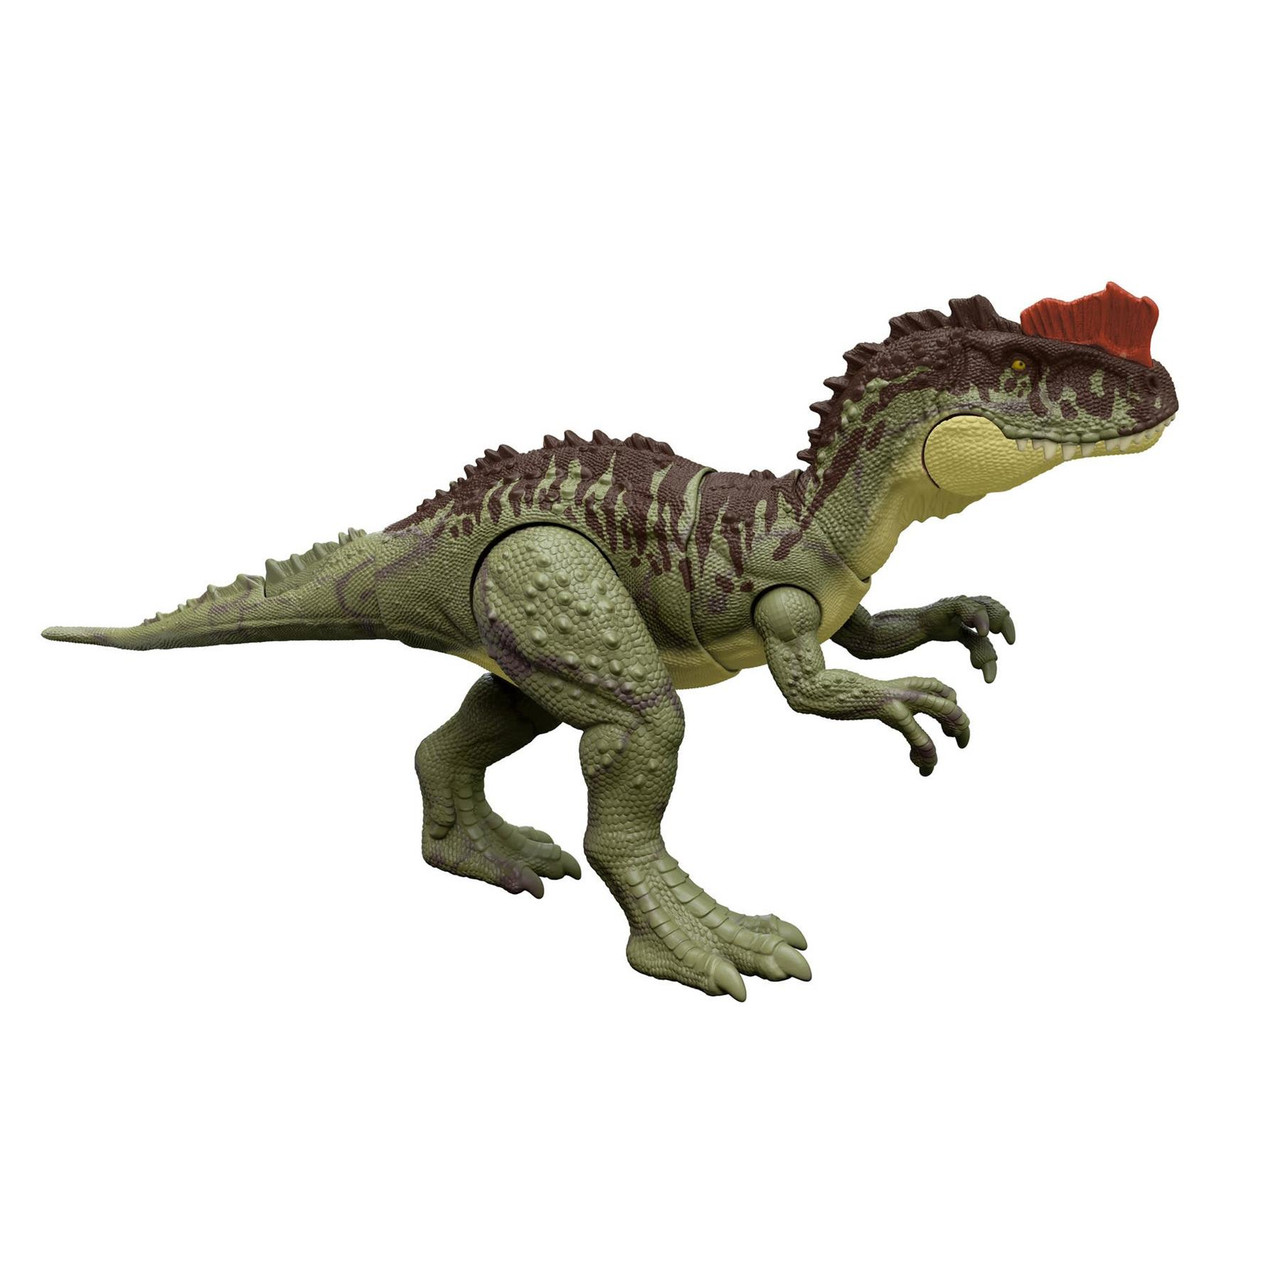 Jurassic World T-Rex vs Indoraptor Dinosaures Jouets Mattel Noel